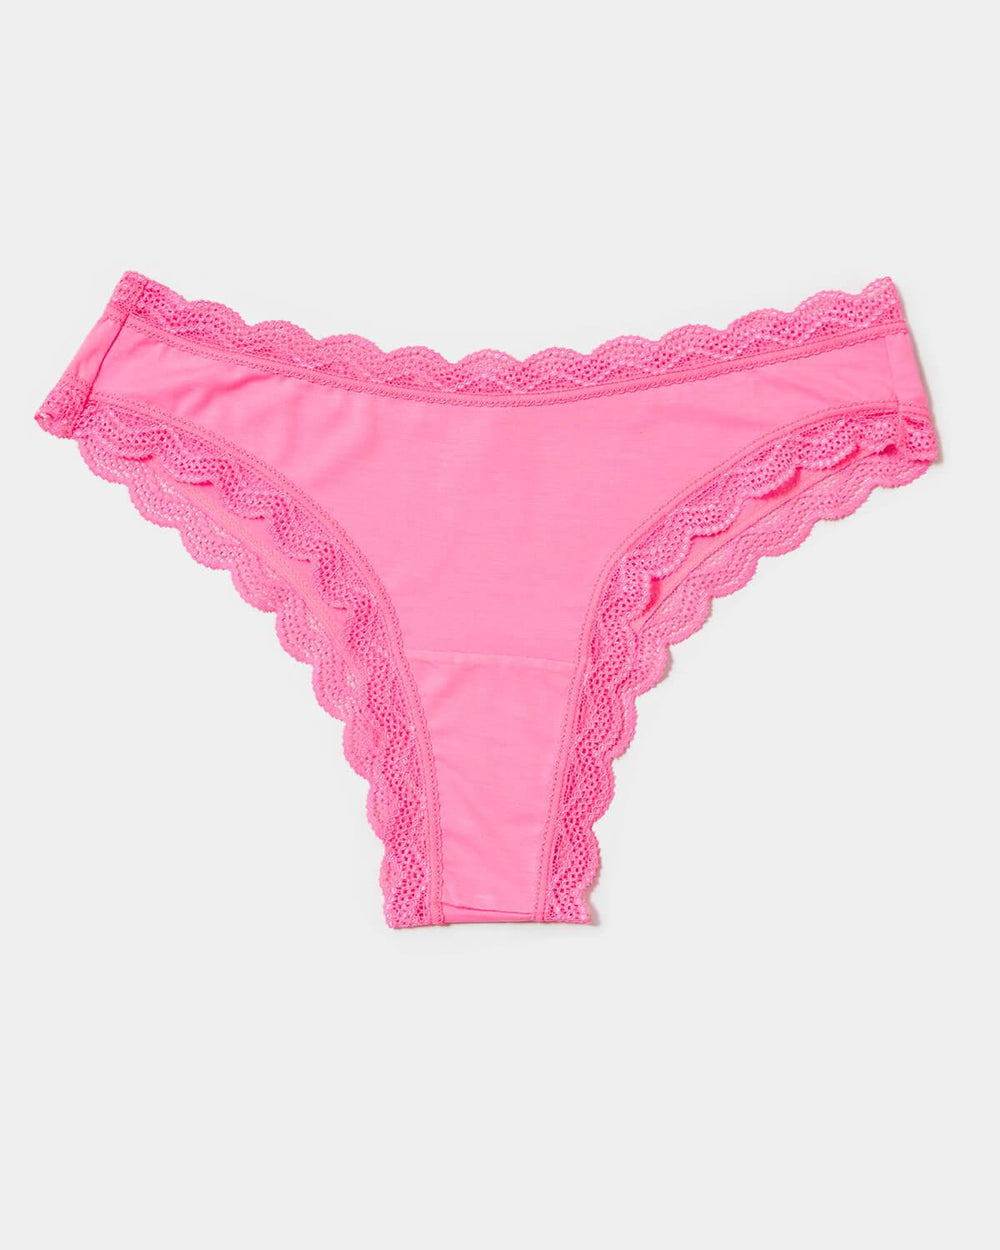 Brazilian Brief - Hot Pink  Sustainable TENCEL™ Lace Underwear